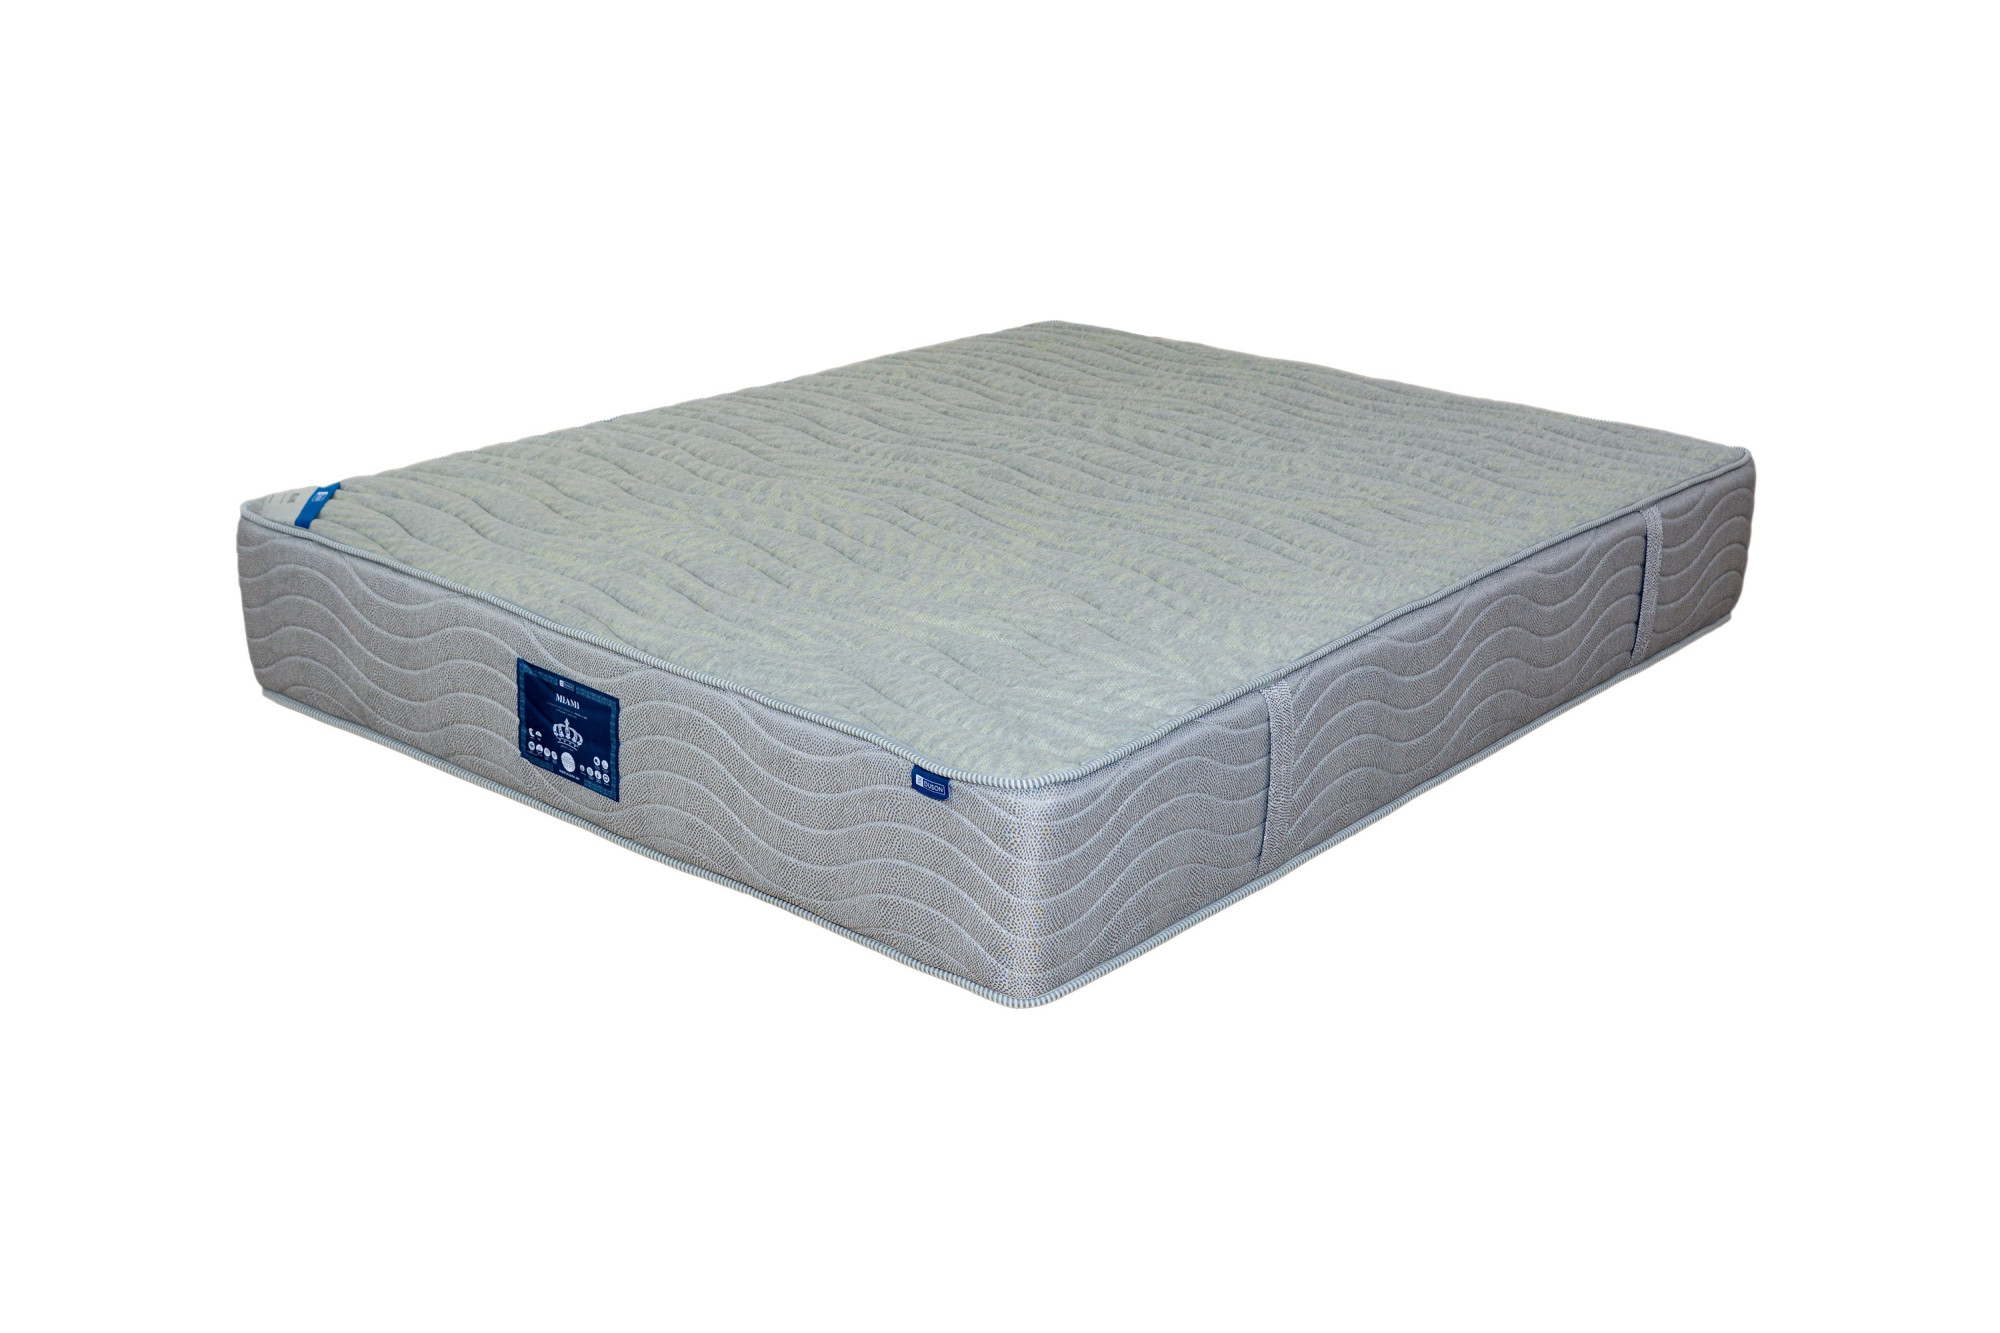 Orthopedic mattress Miami Soft-Hard 180x190 hard, 31cm